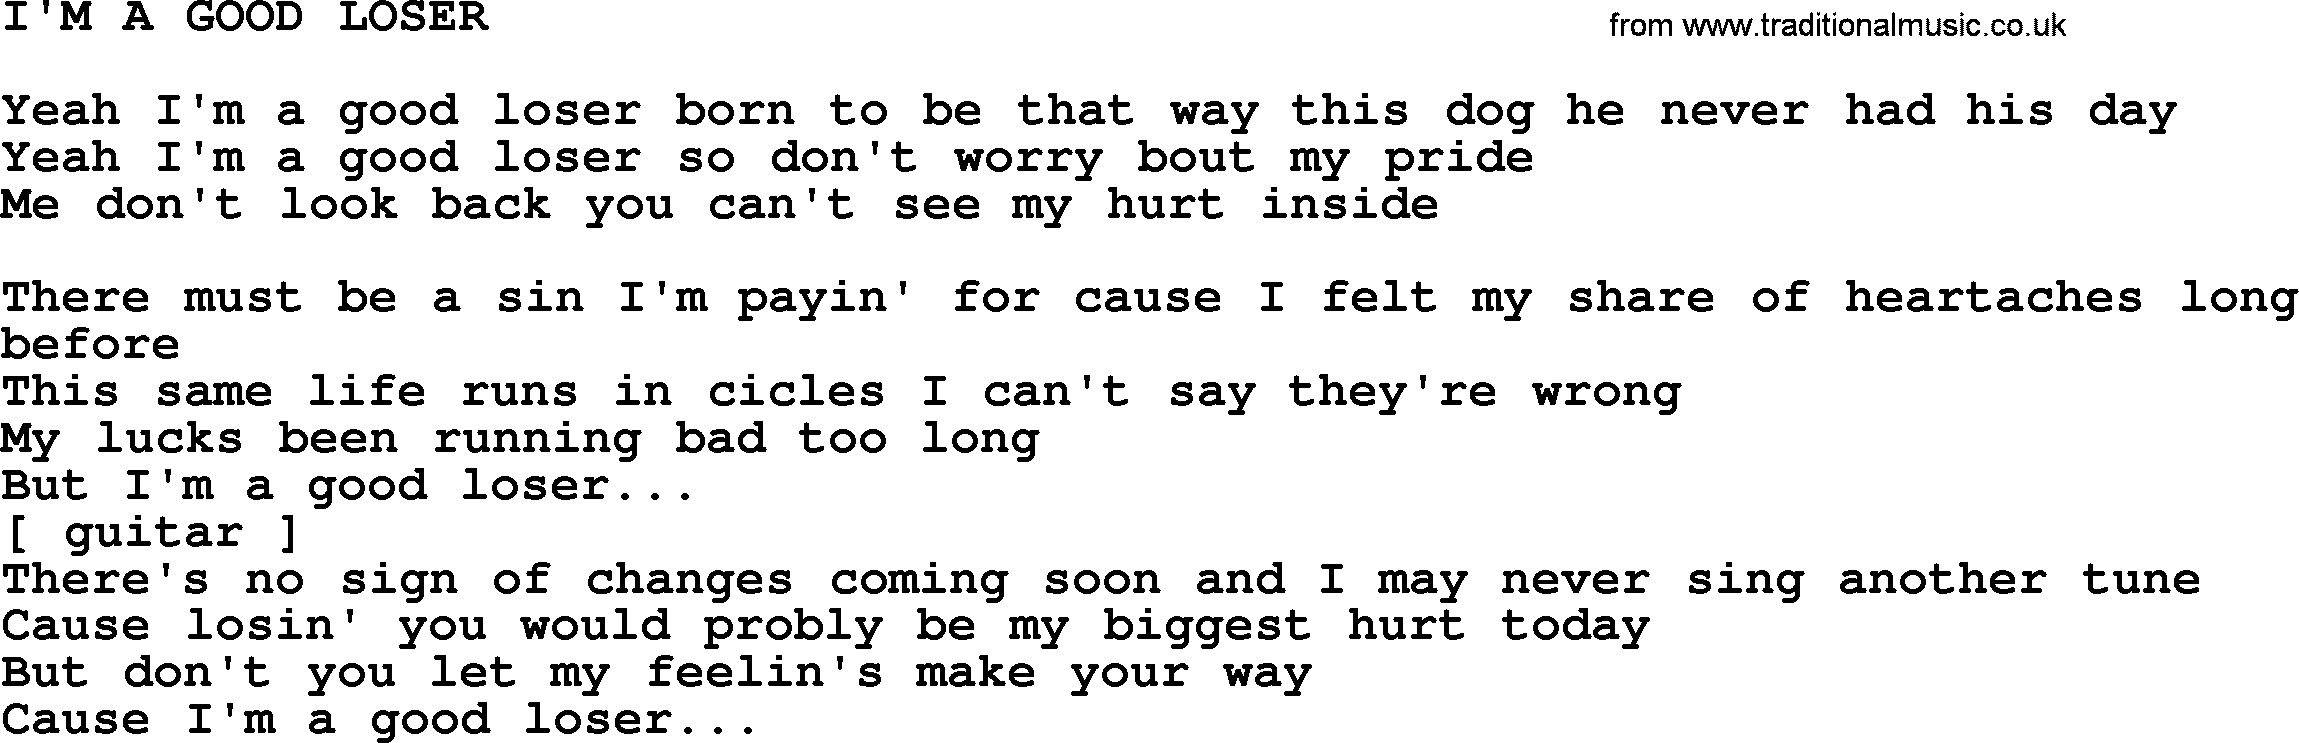 Merle Haggard song: I'm A Good Loser, lyrics.